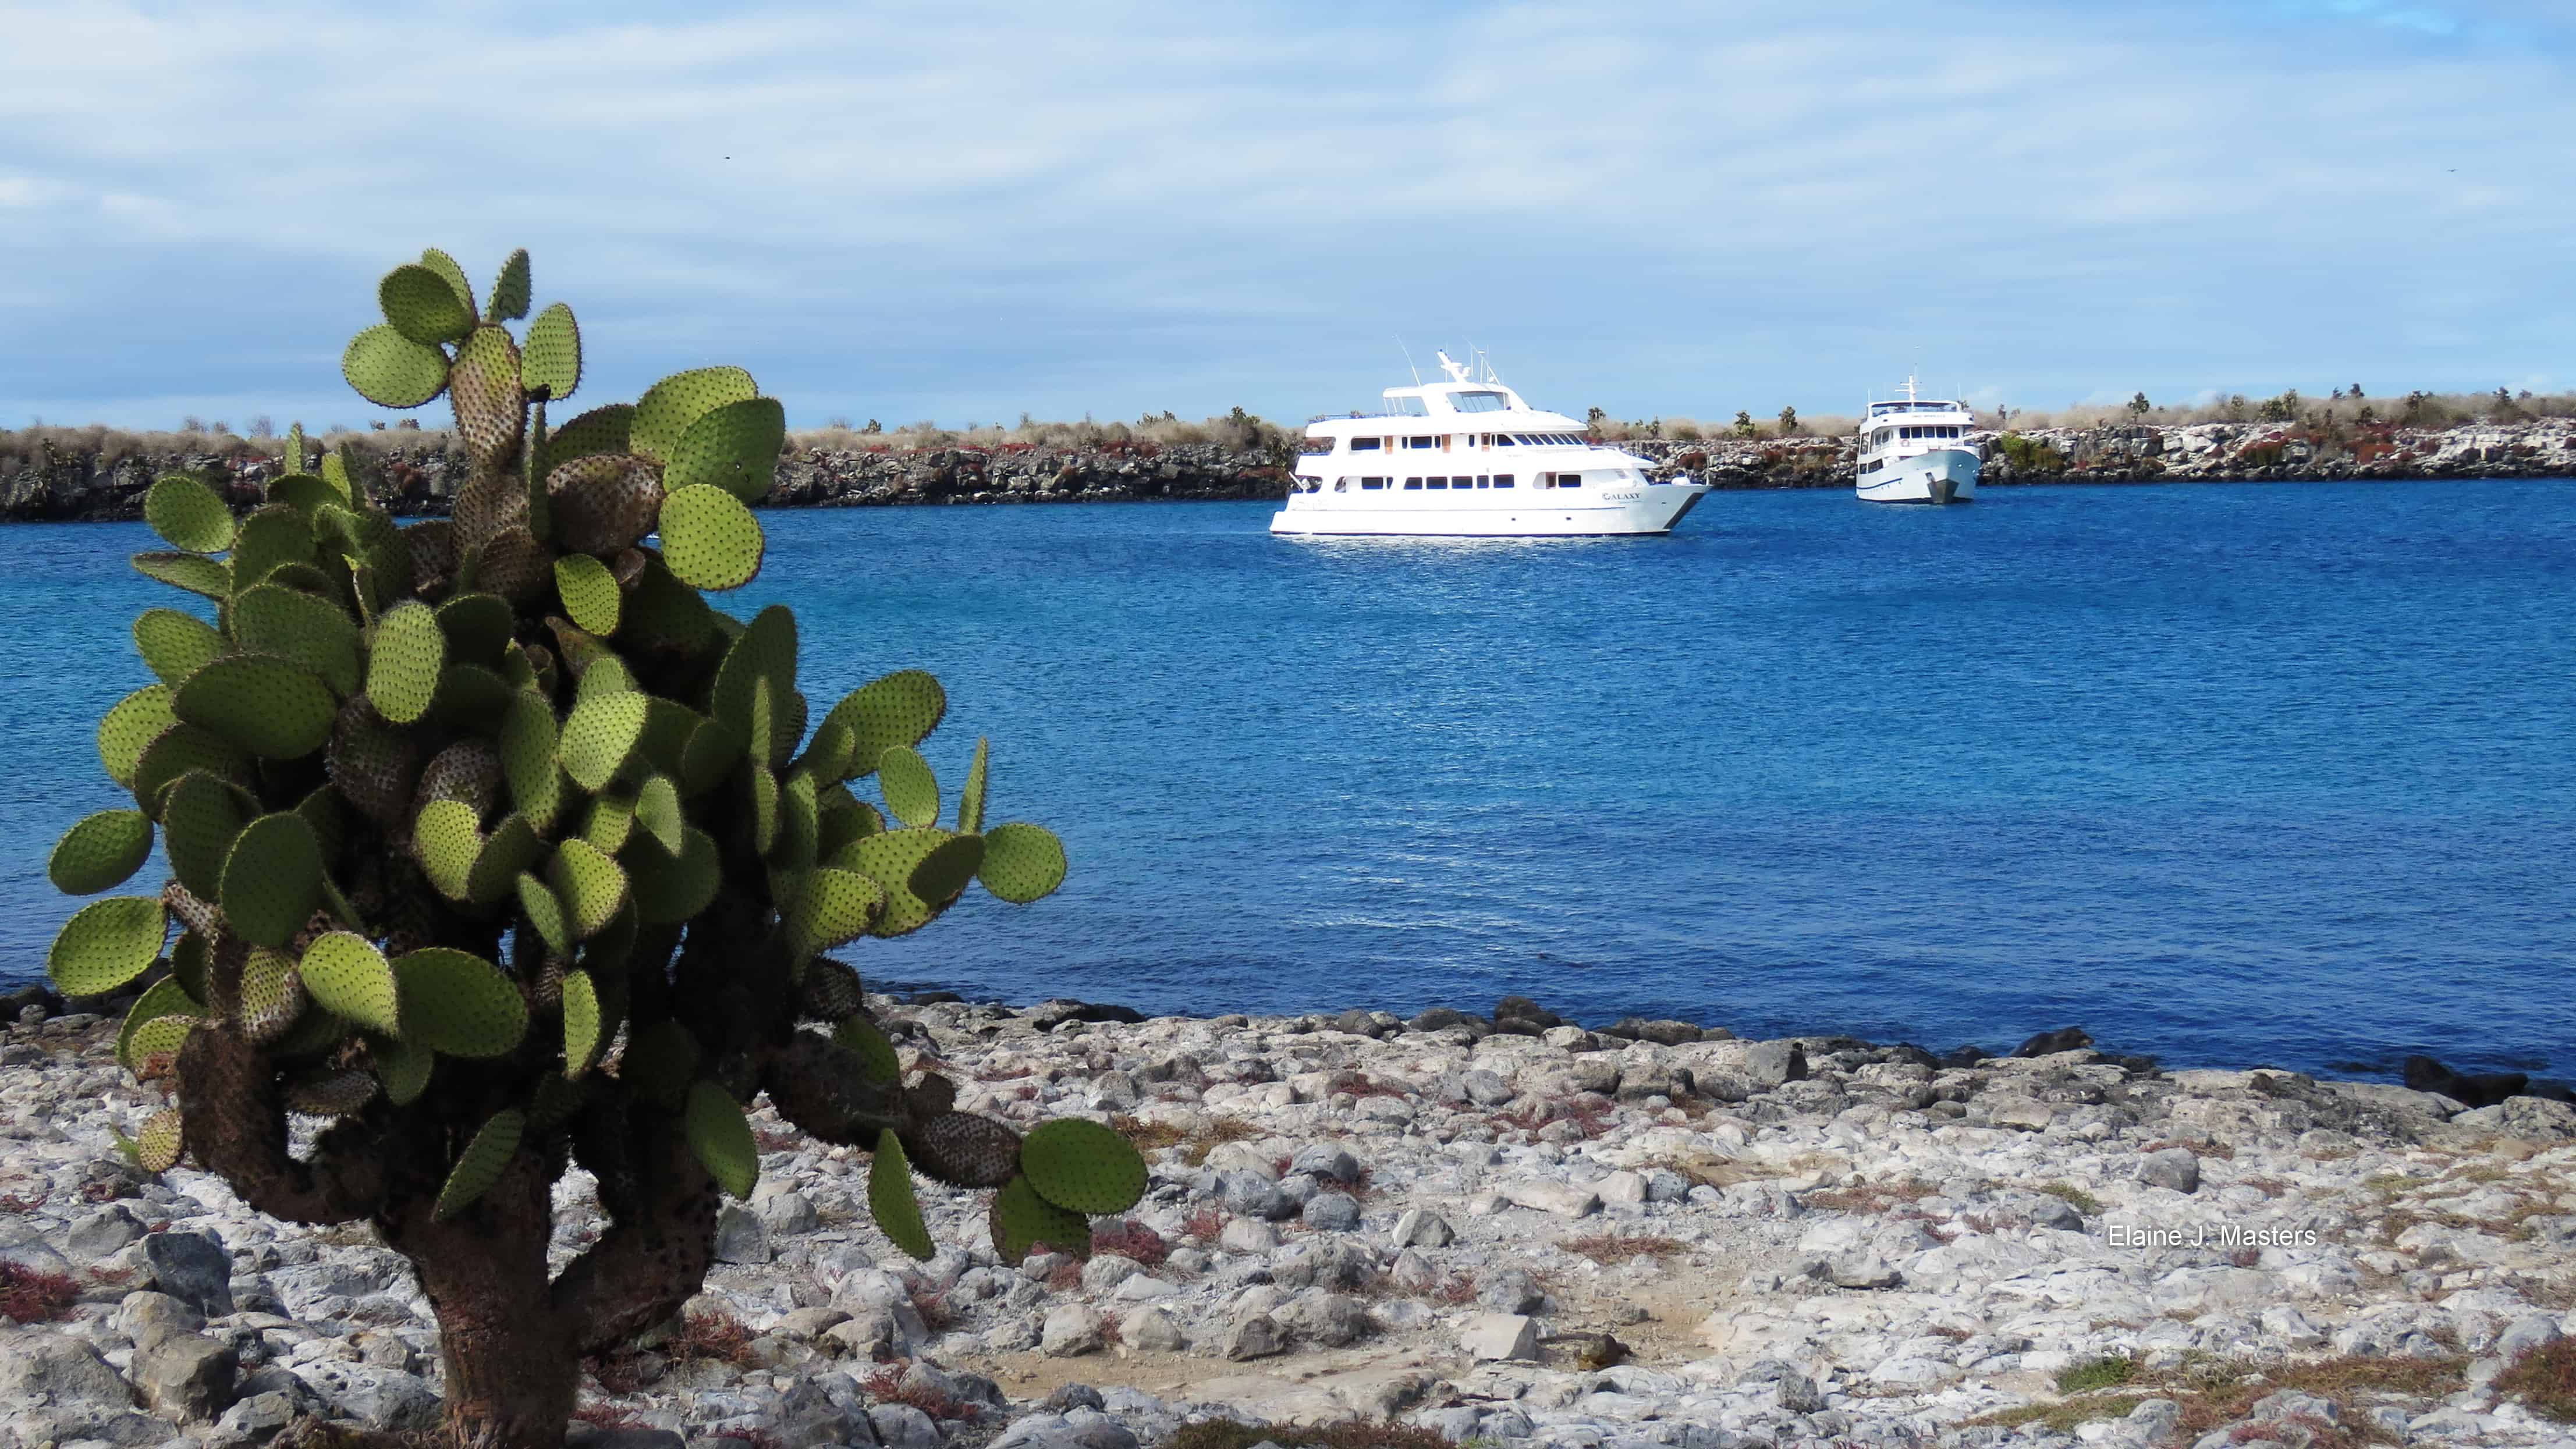 Galapagos Islands Cruise Ships